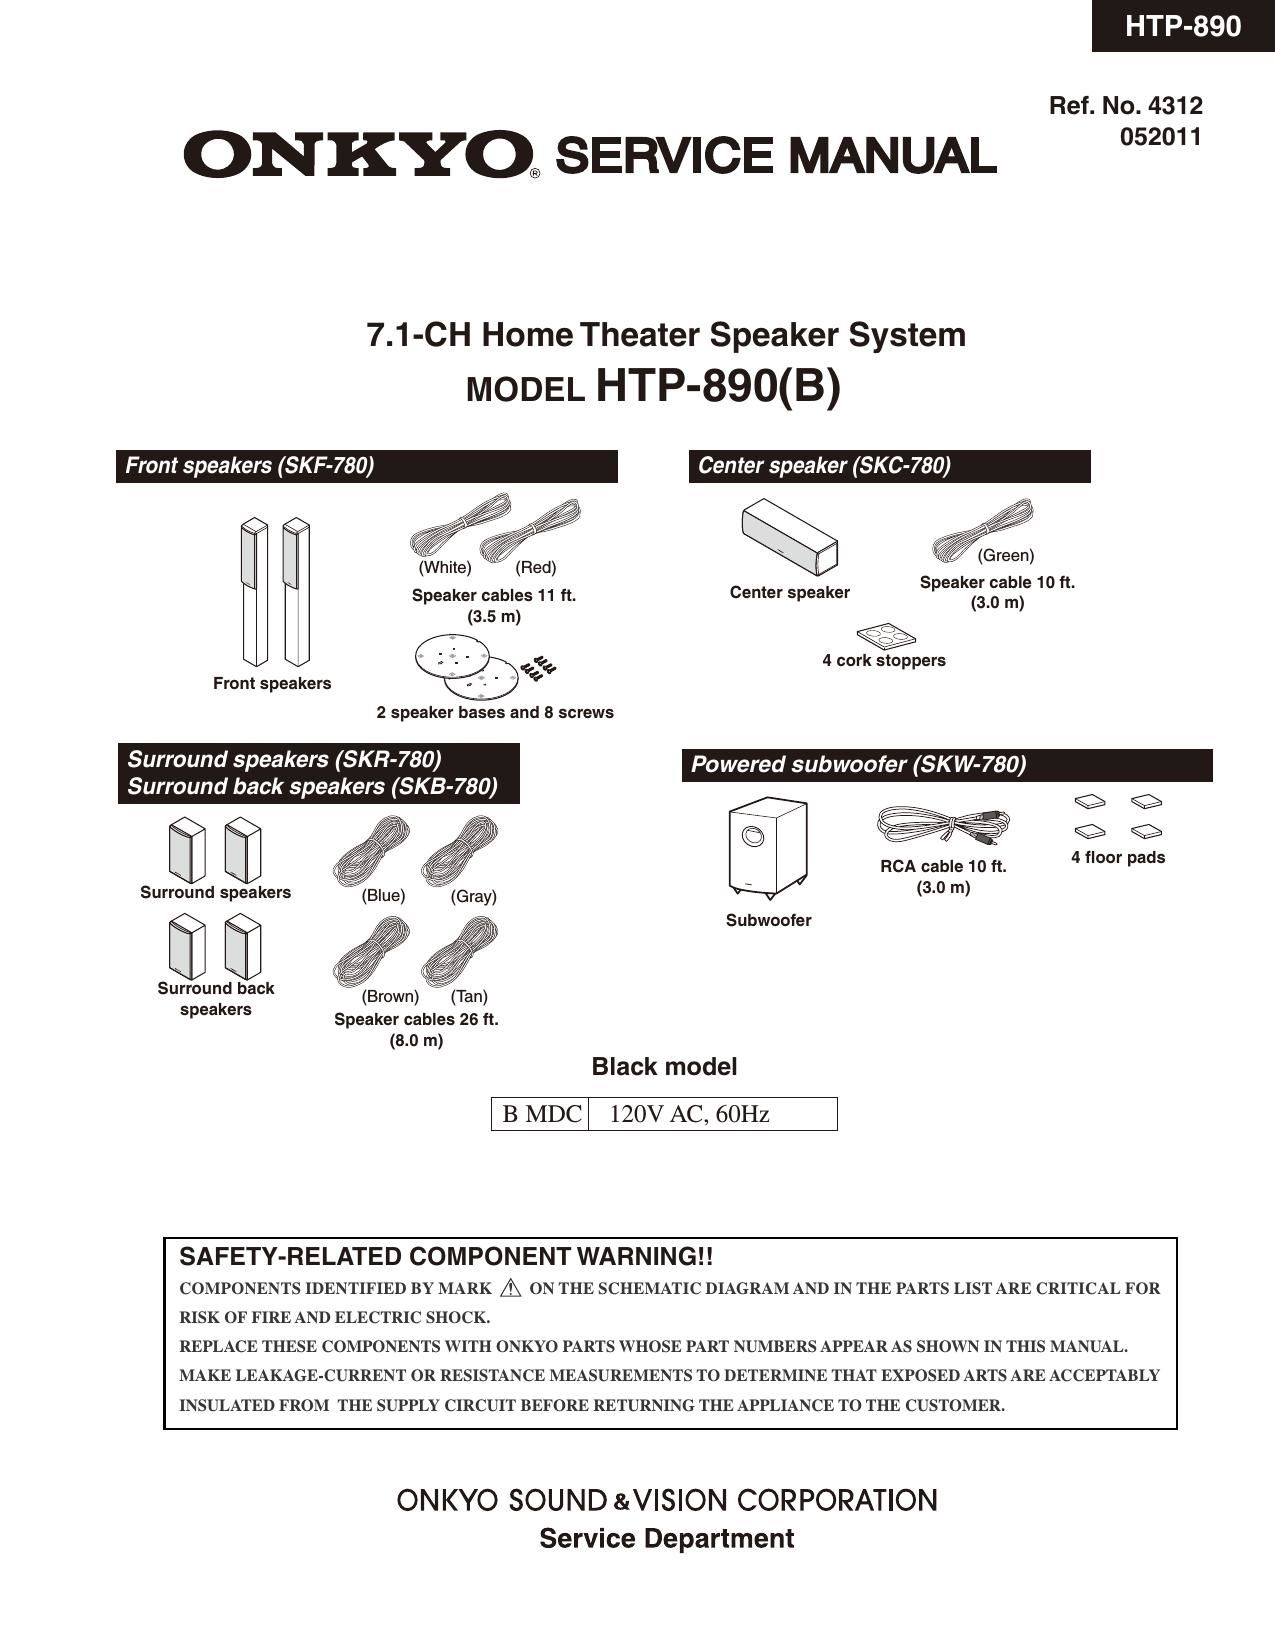 Onkyo HTP 890 Service Manual 2